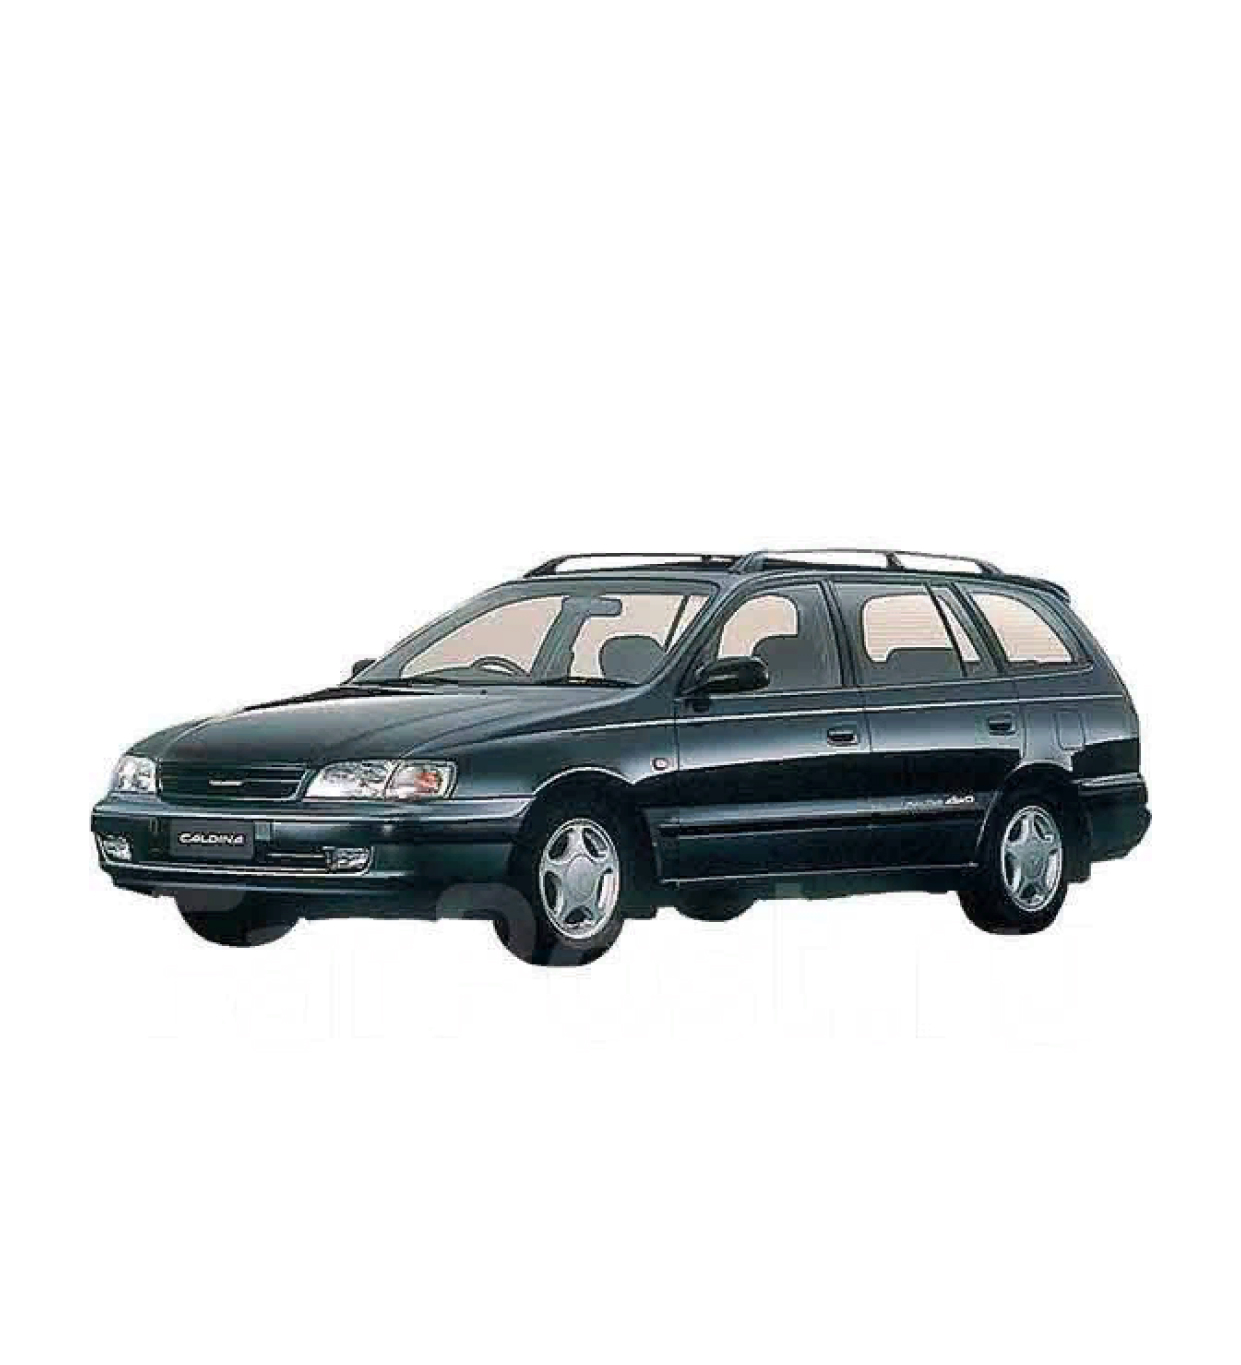 Toyota Caldina 1996 2.0